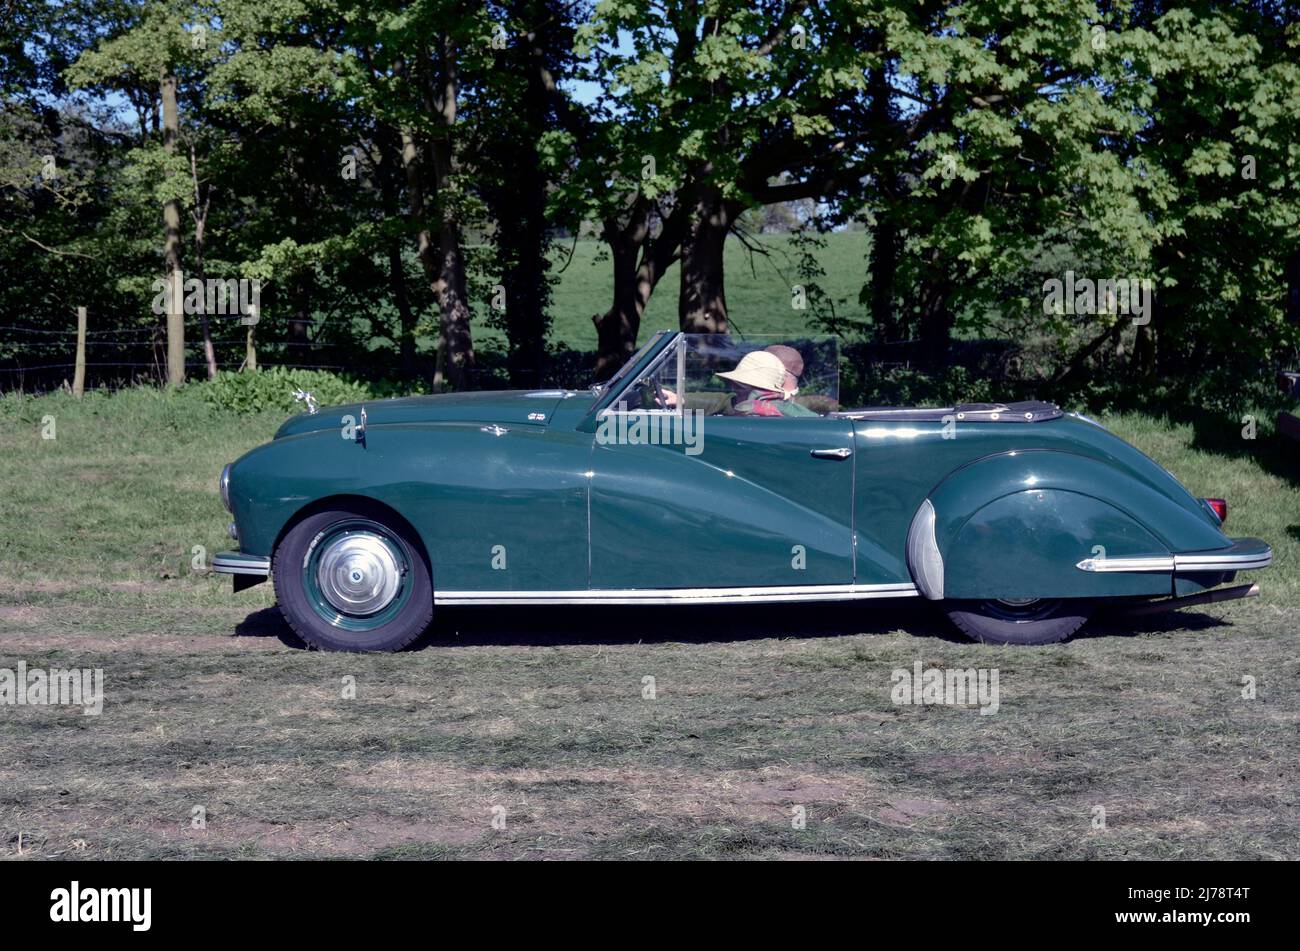 vintage peugeot open top sports car Stock Photo